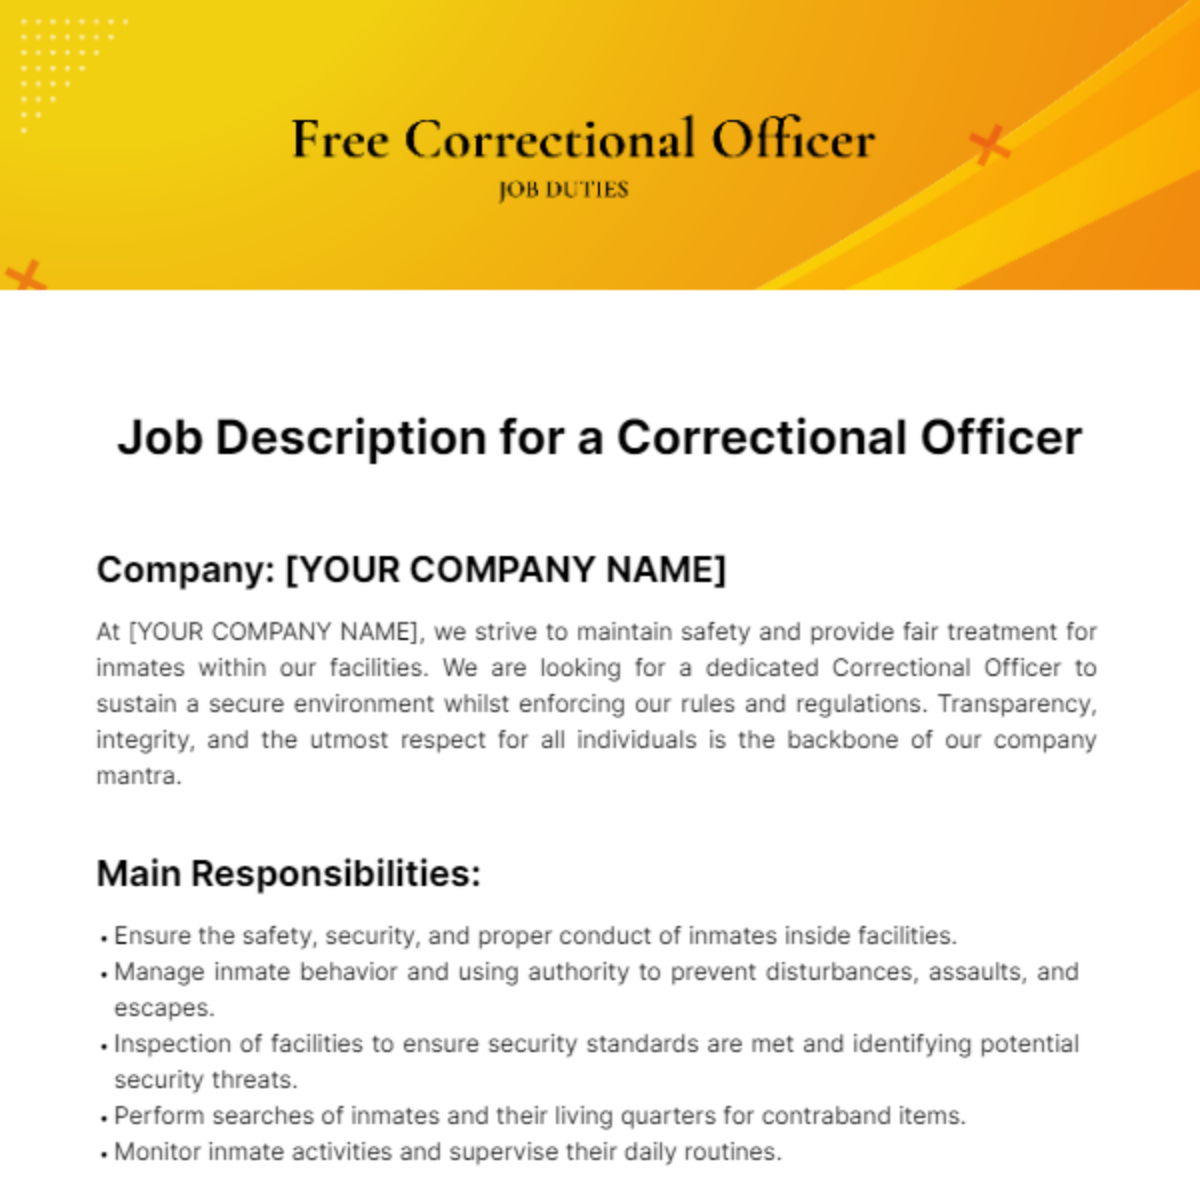 Free Correctional Officer Job Duties Template